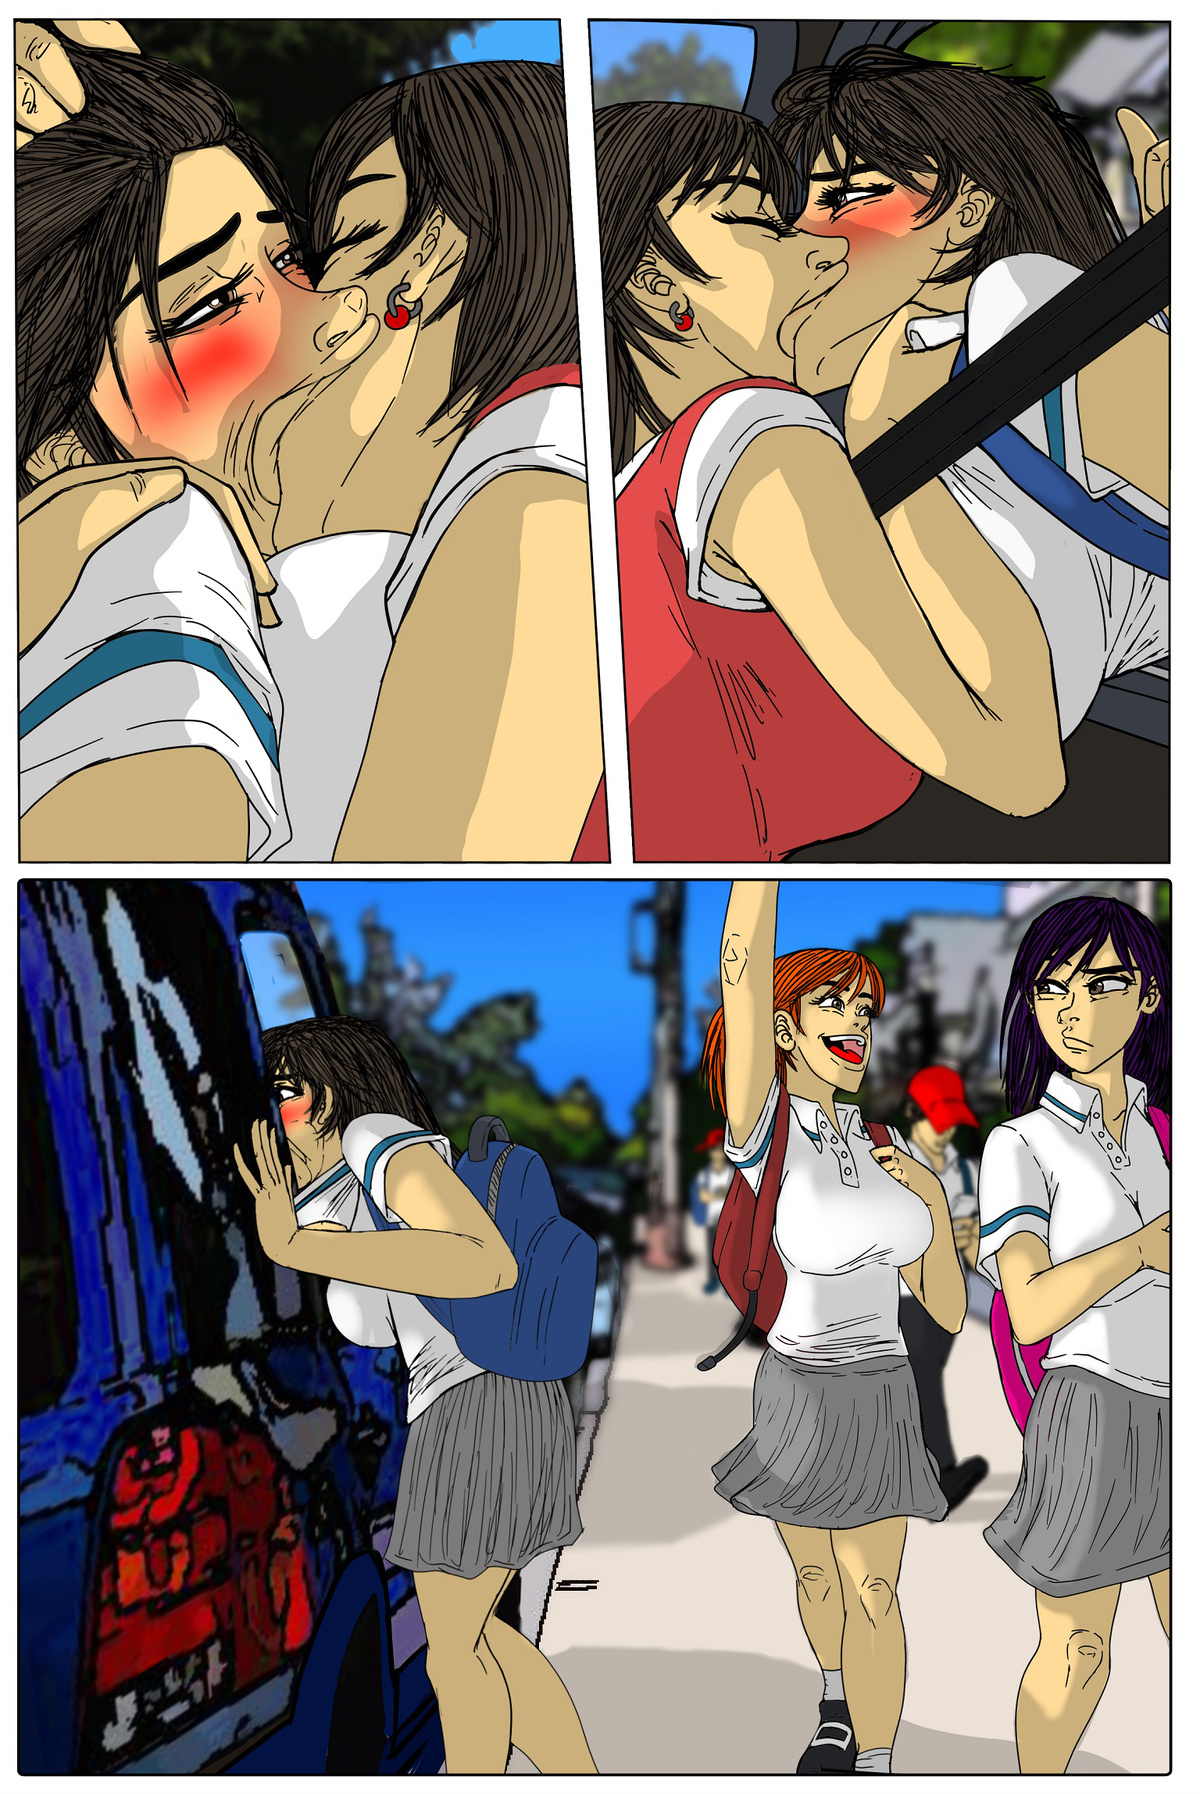 Incestral Affairs Manga 4 - Page 5 - HentaiEra